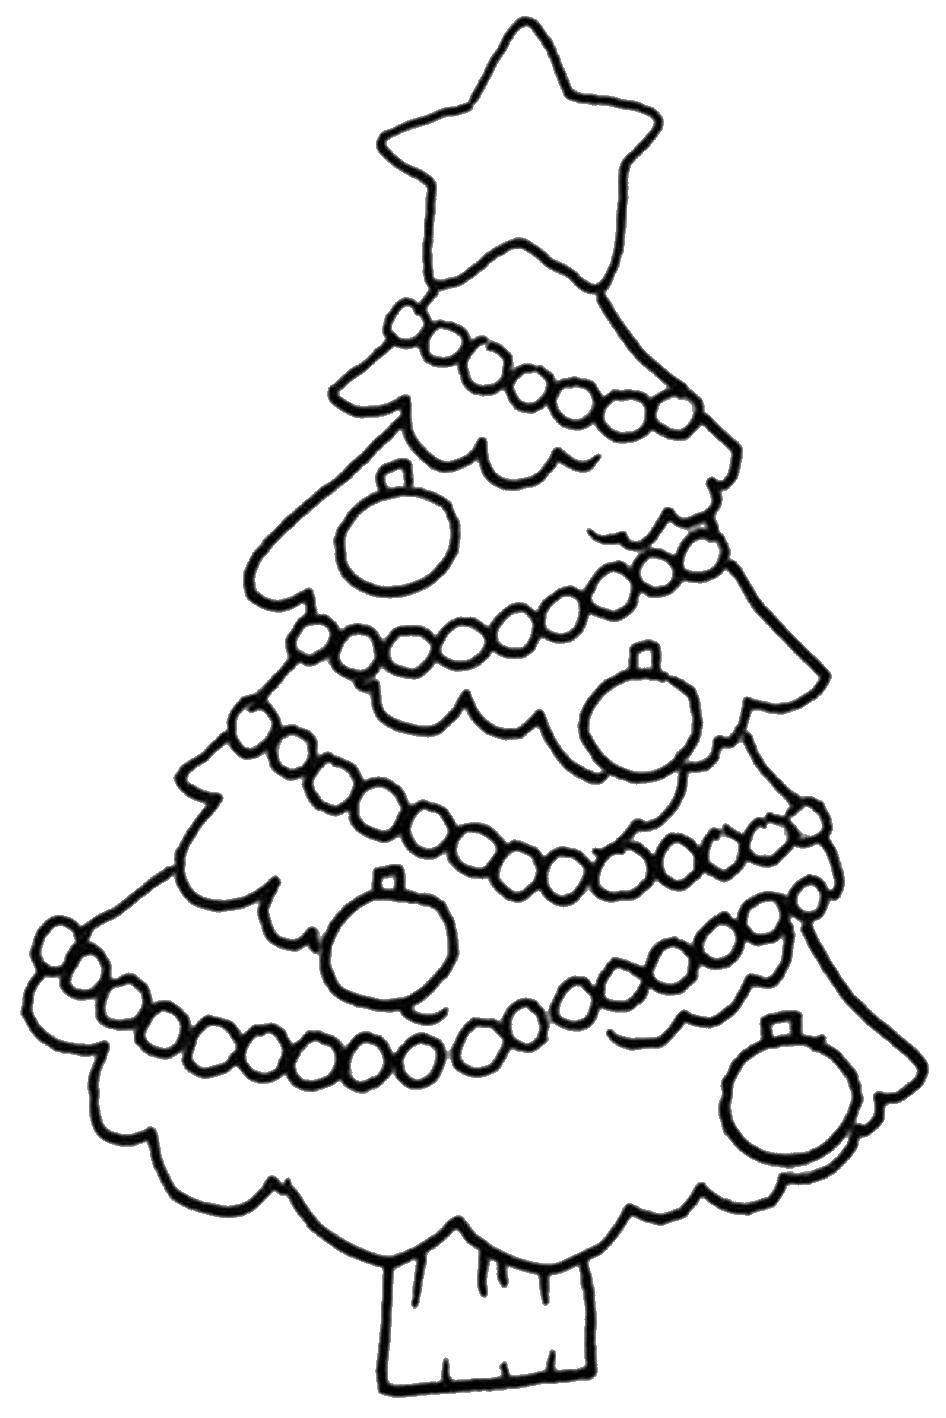 Раскраска с изображением Санты и елки (елка, Санта, развлечение)